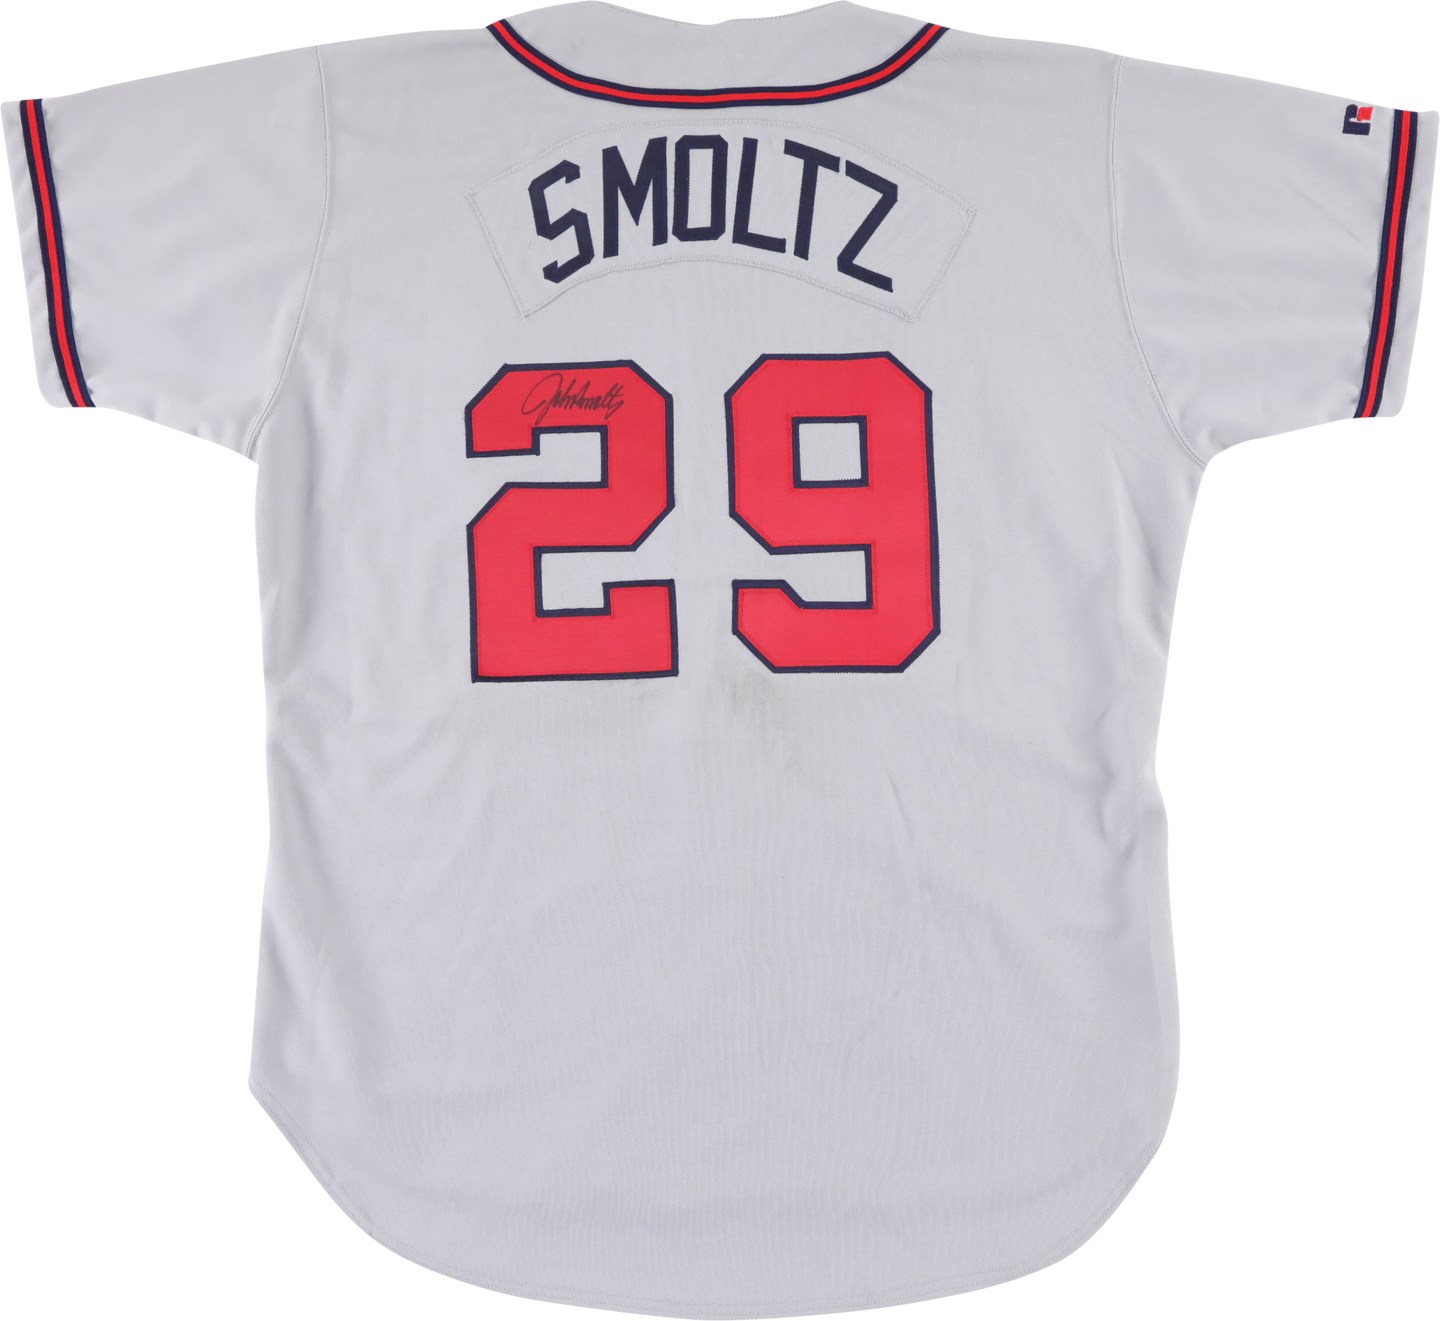 Mid-1990s John Smoltz Atlanta Braves Signed Game Worn Jersey